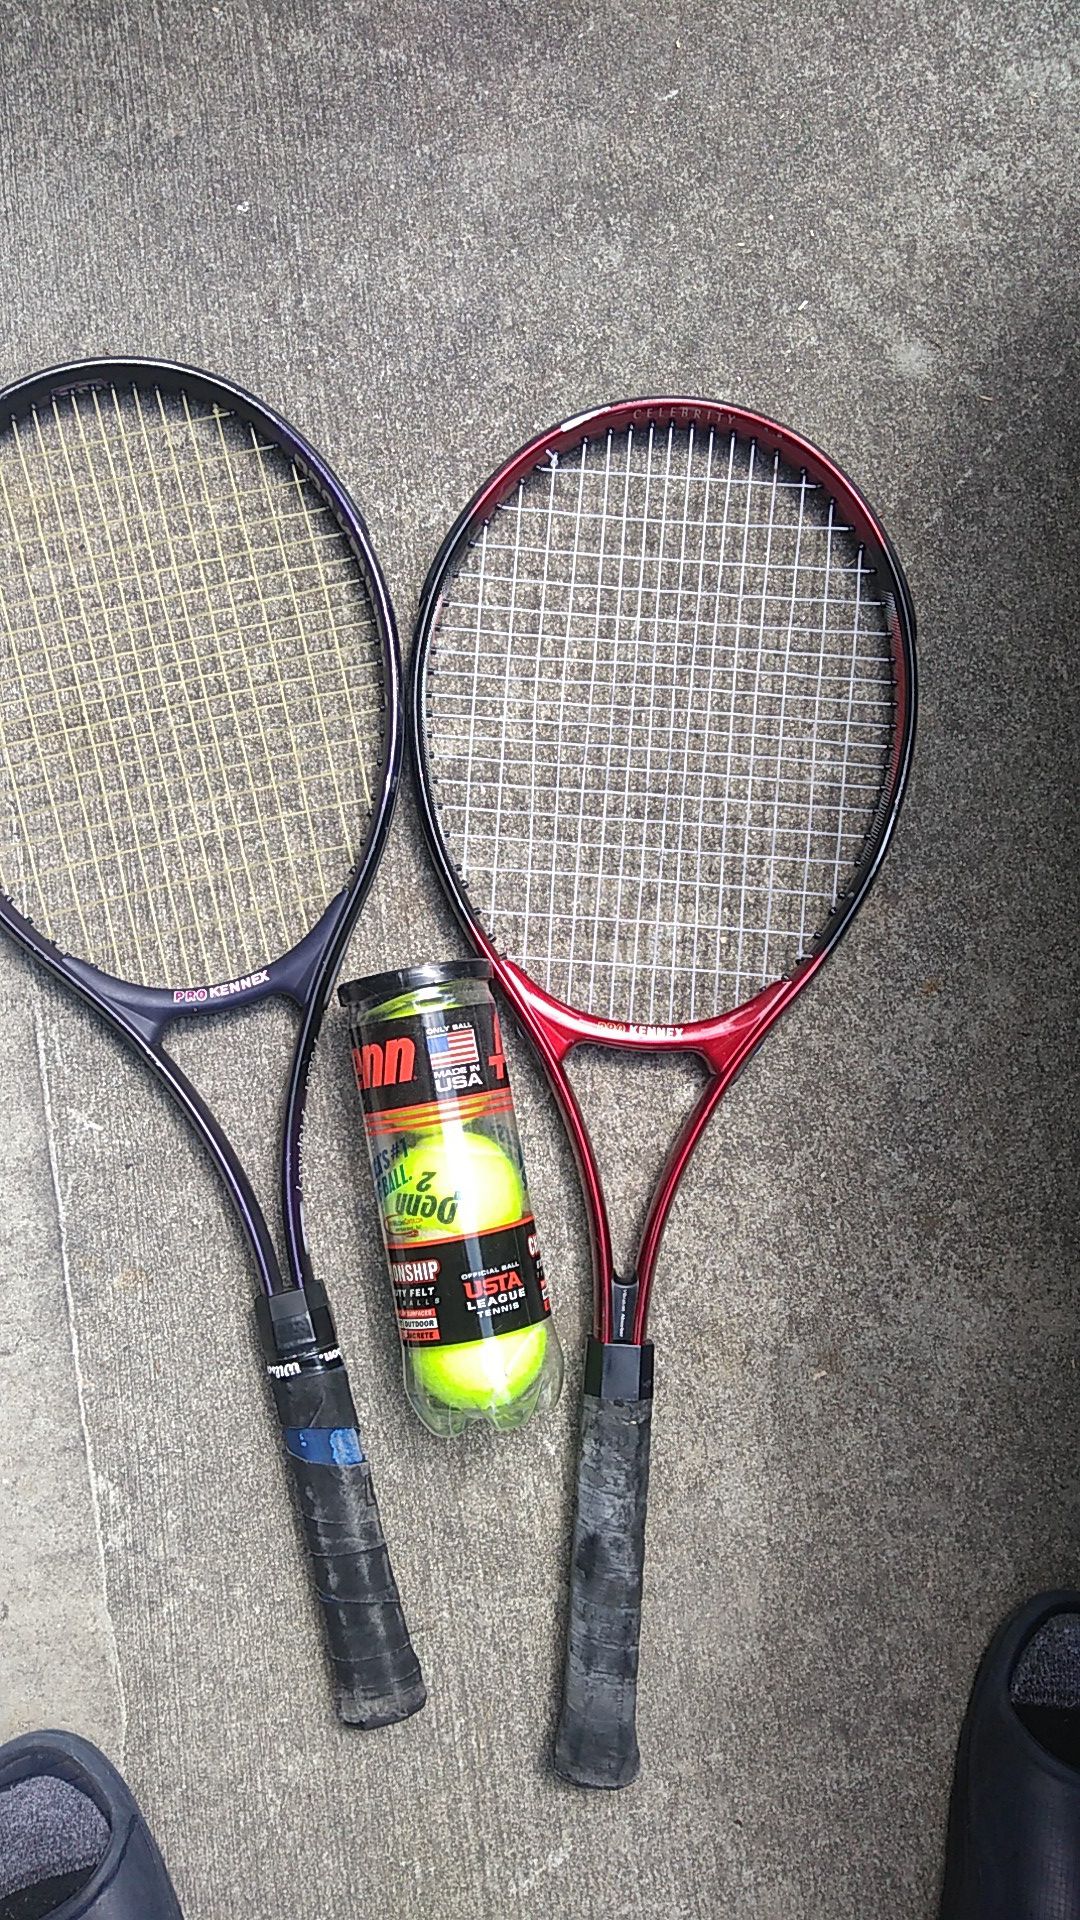 Beginner's Tennis Set